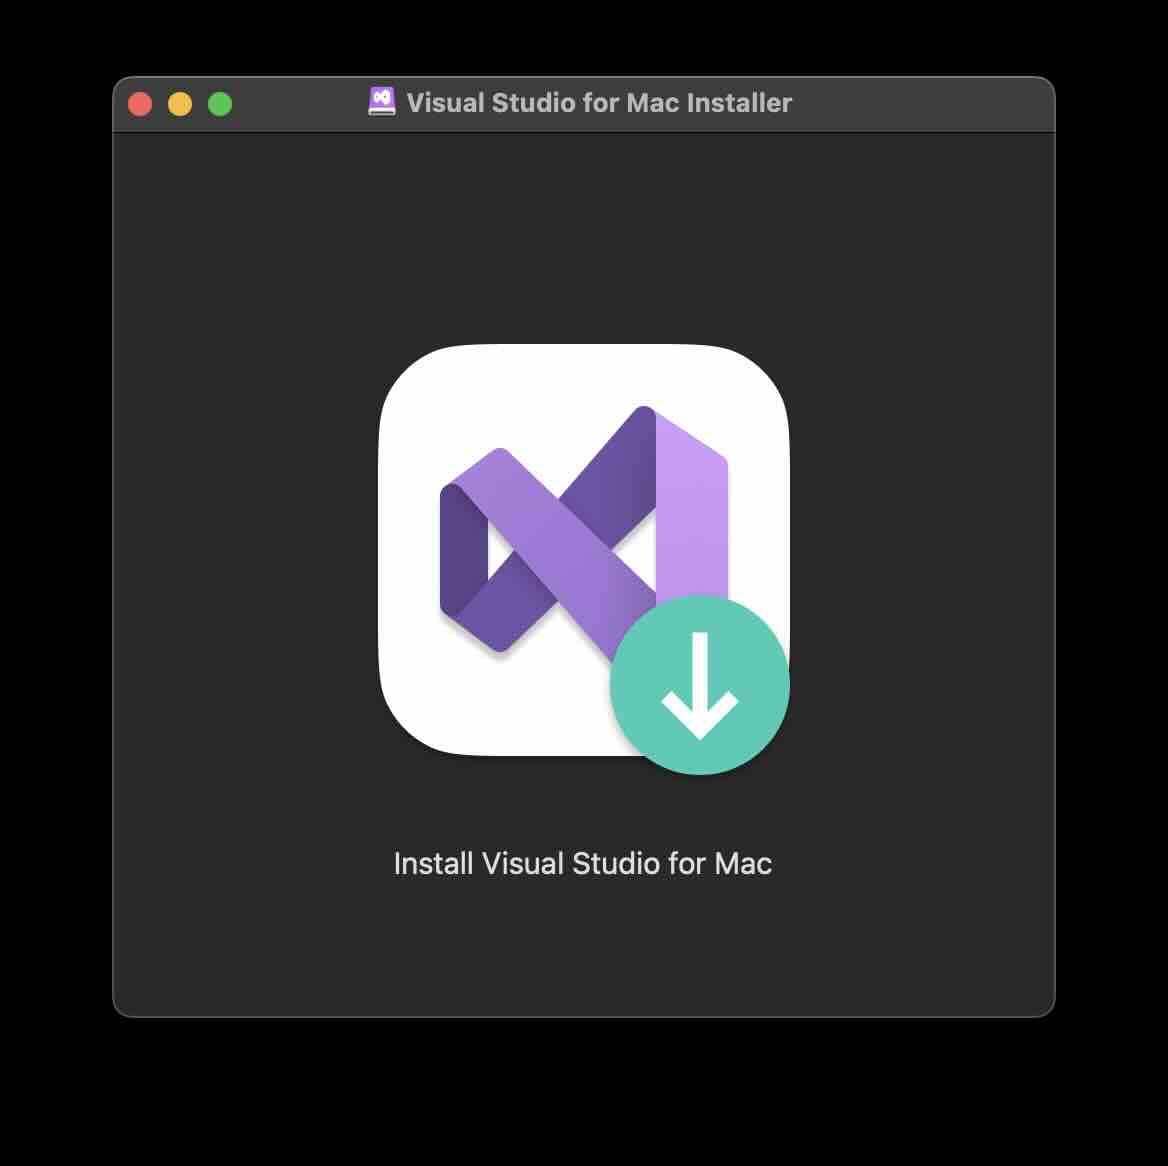 Install Visual Studio for Mac